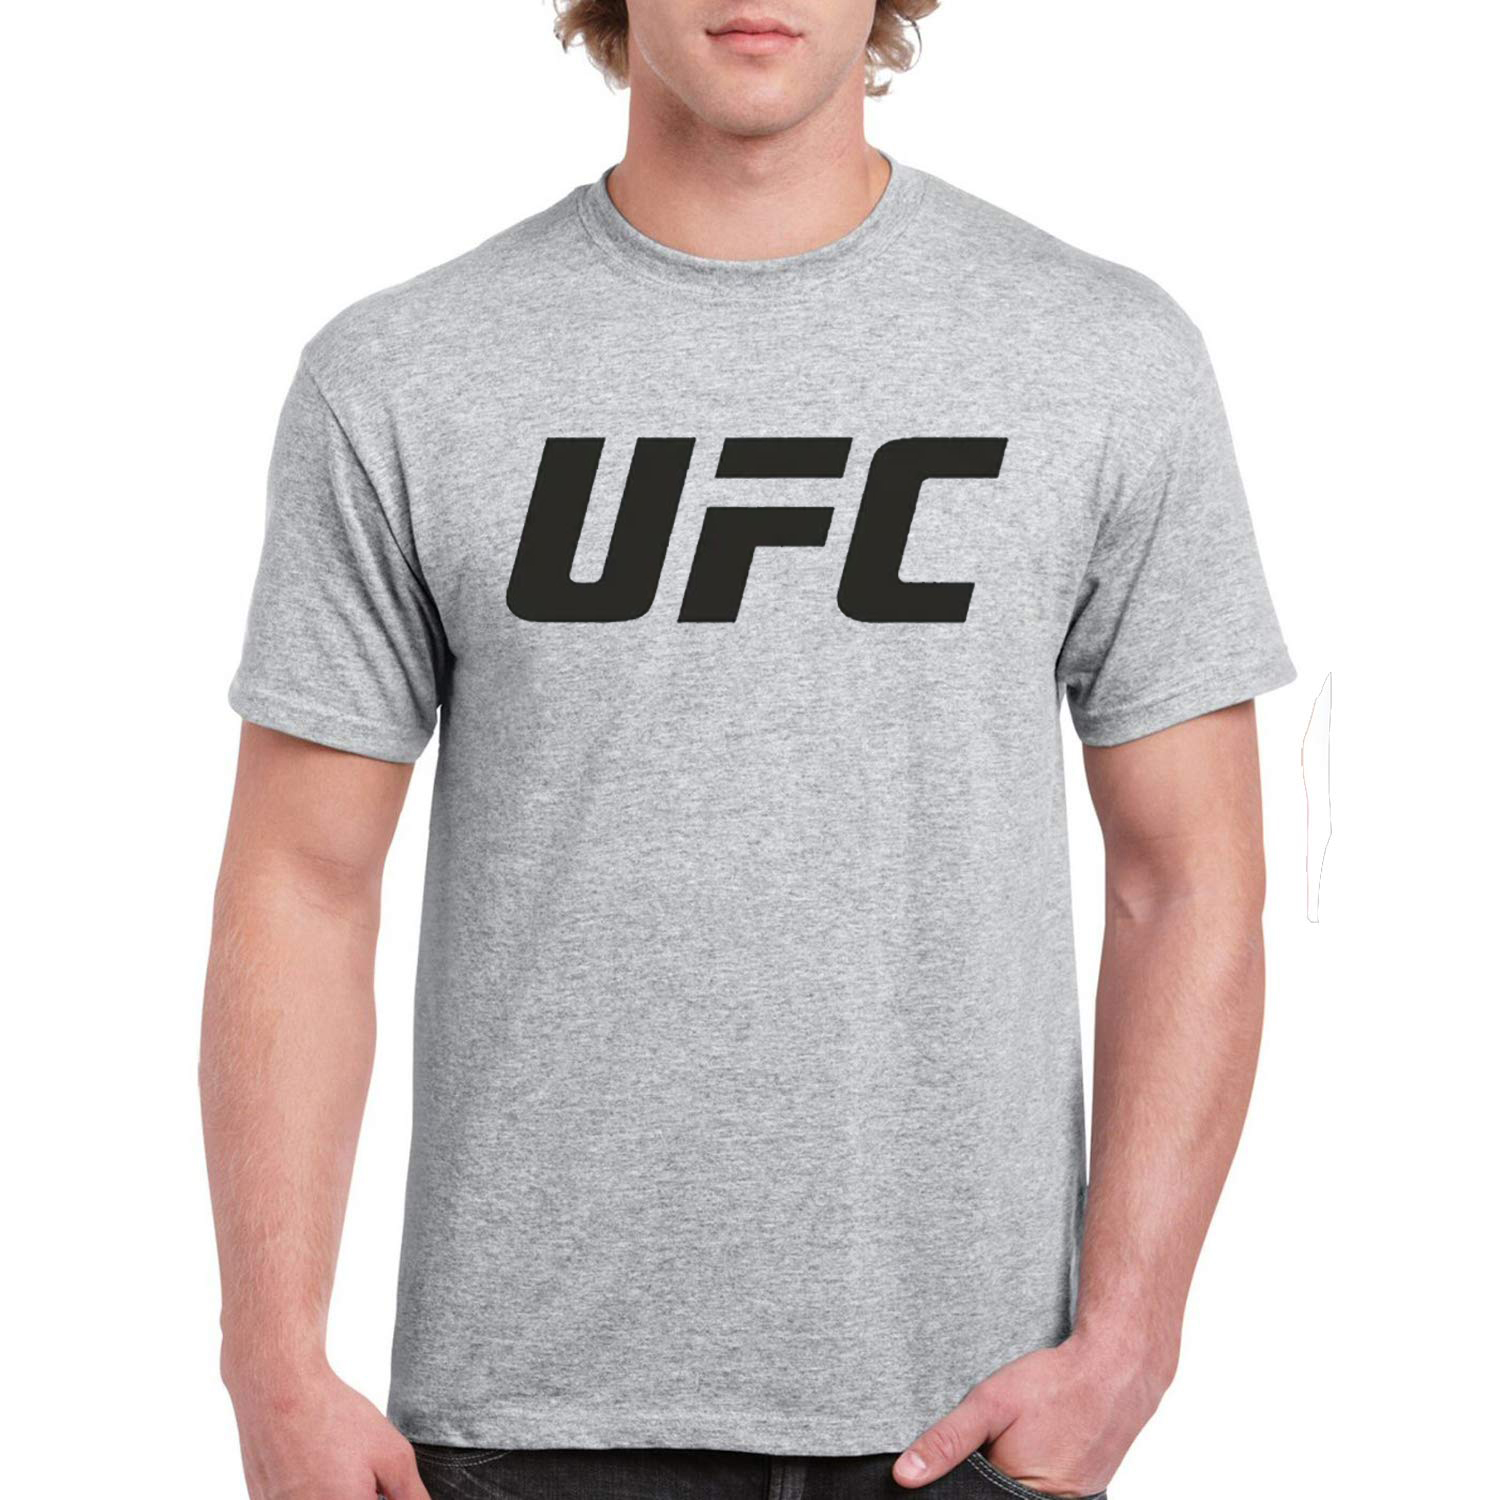 UFC LOGO T-SHIRT - Swag Shirts